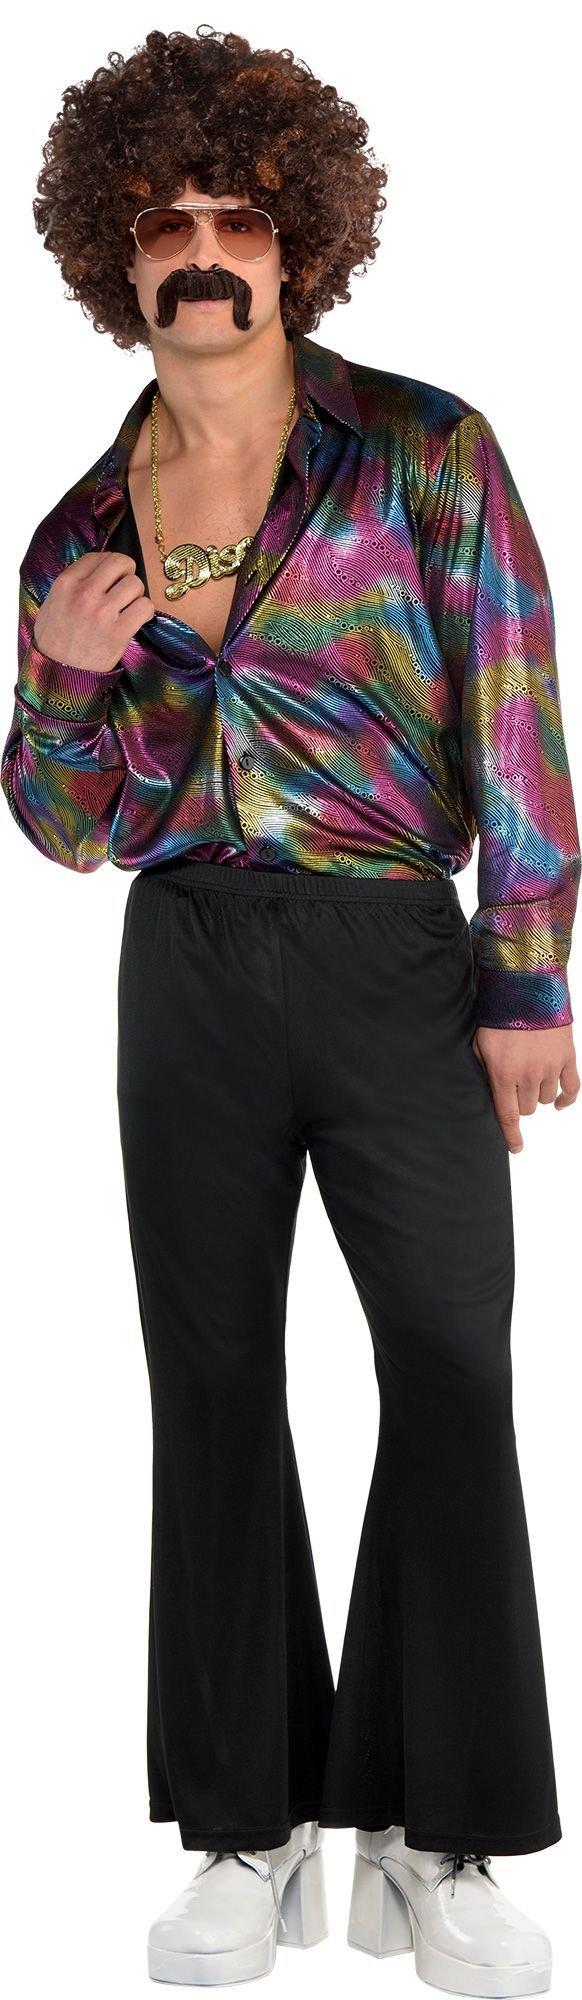 Men's Disco King Costume w/ 70s Sequin Rainbow Pants